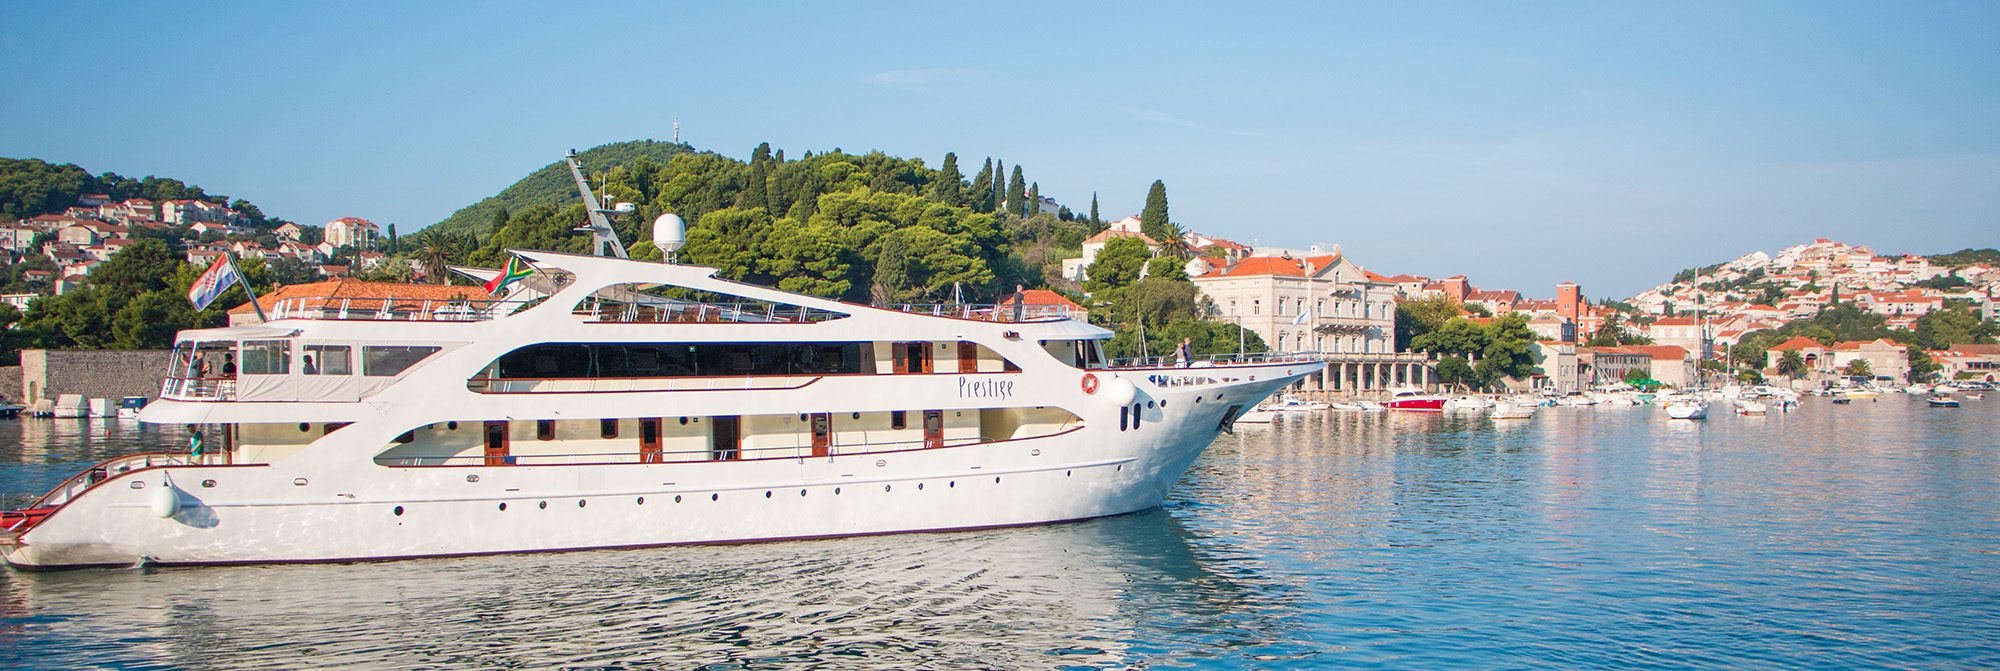 55+ Celebrity Cruises Dalmatian Coast And Italy Picture